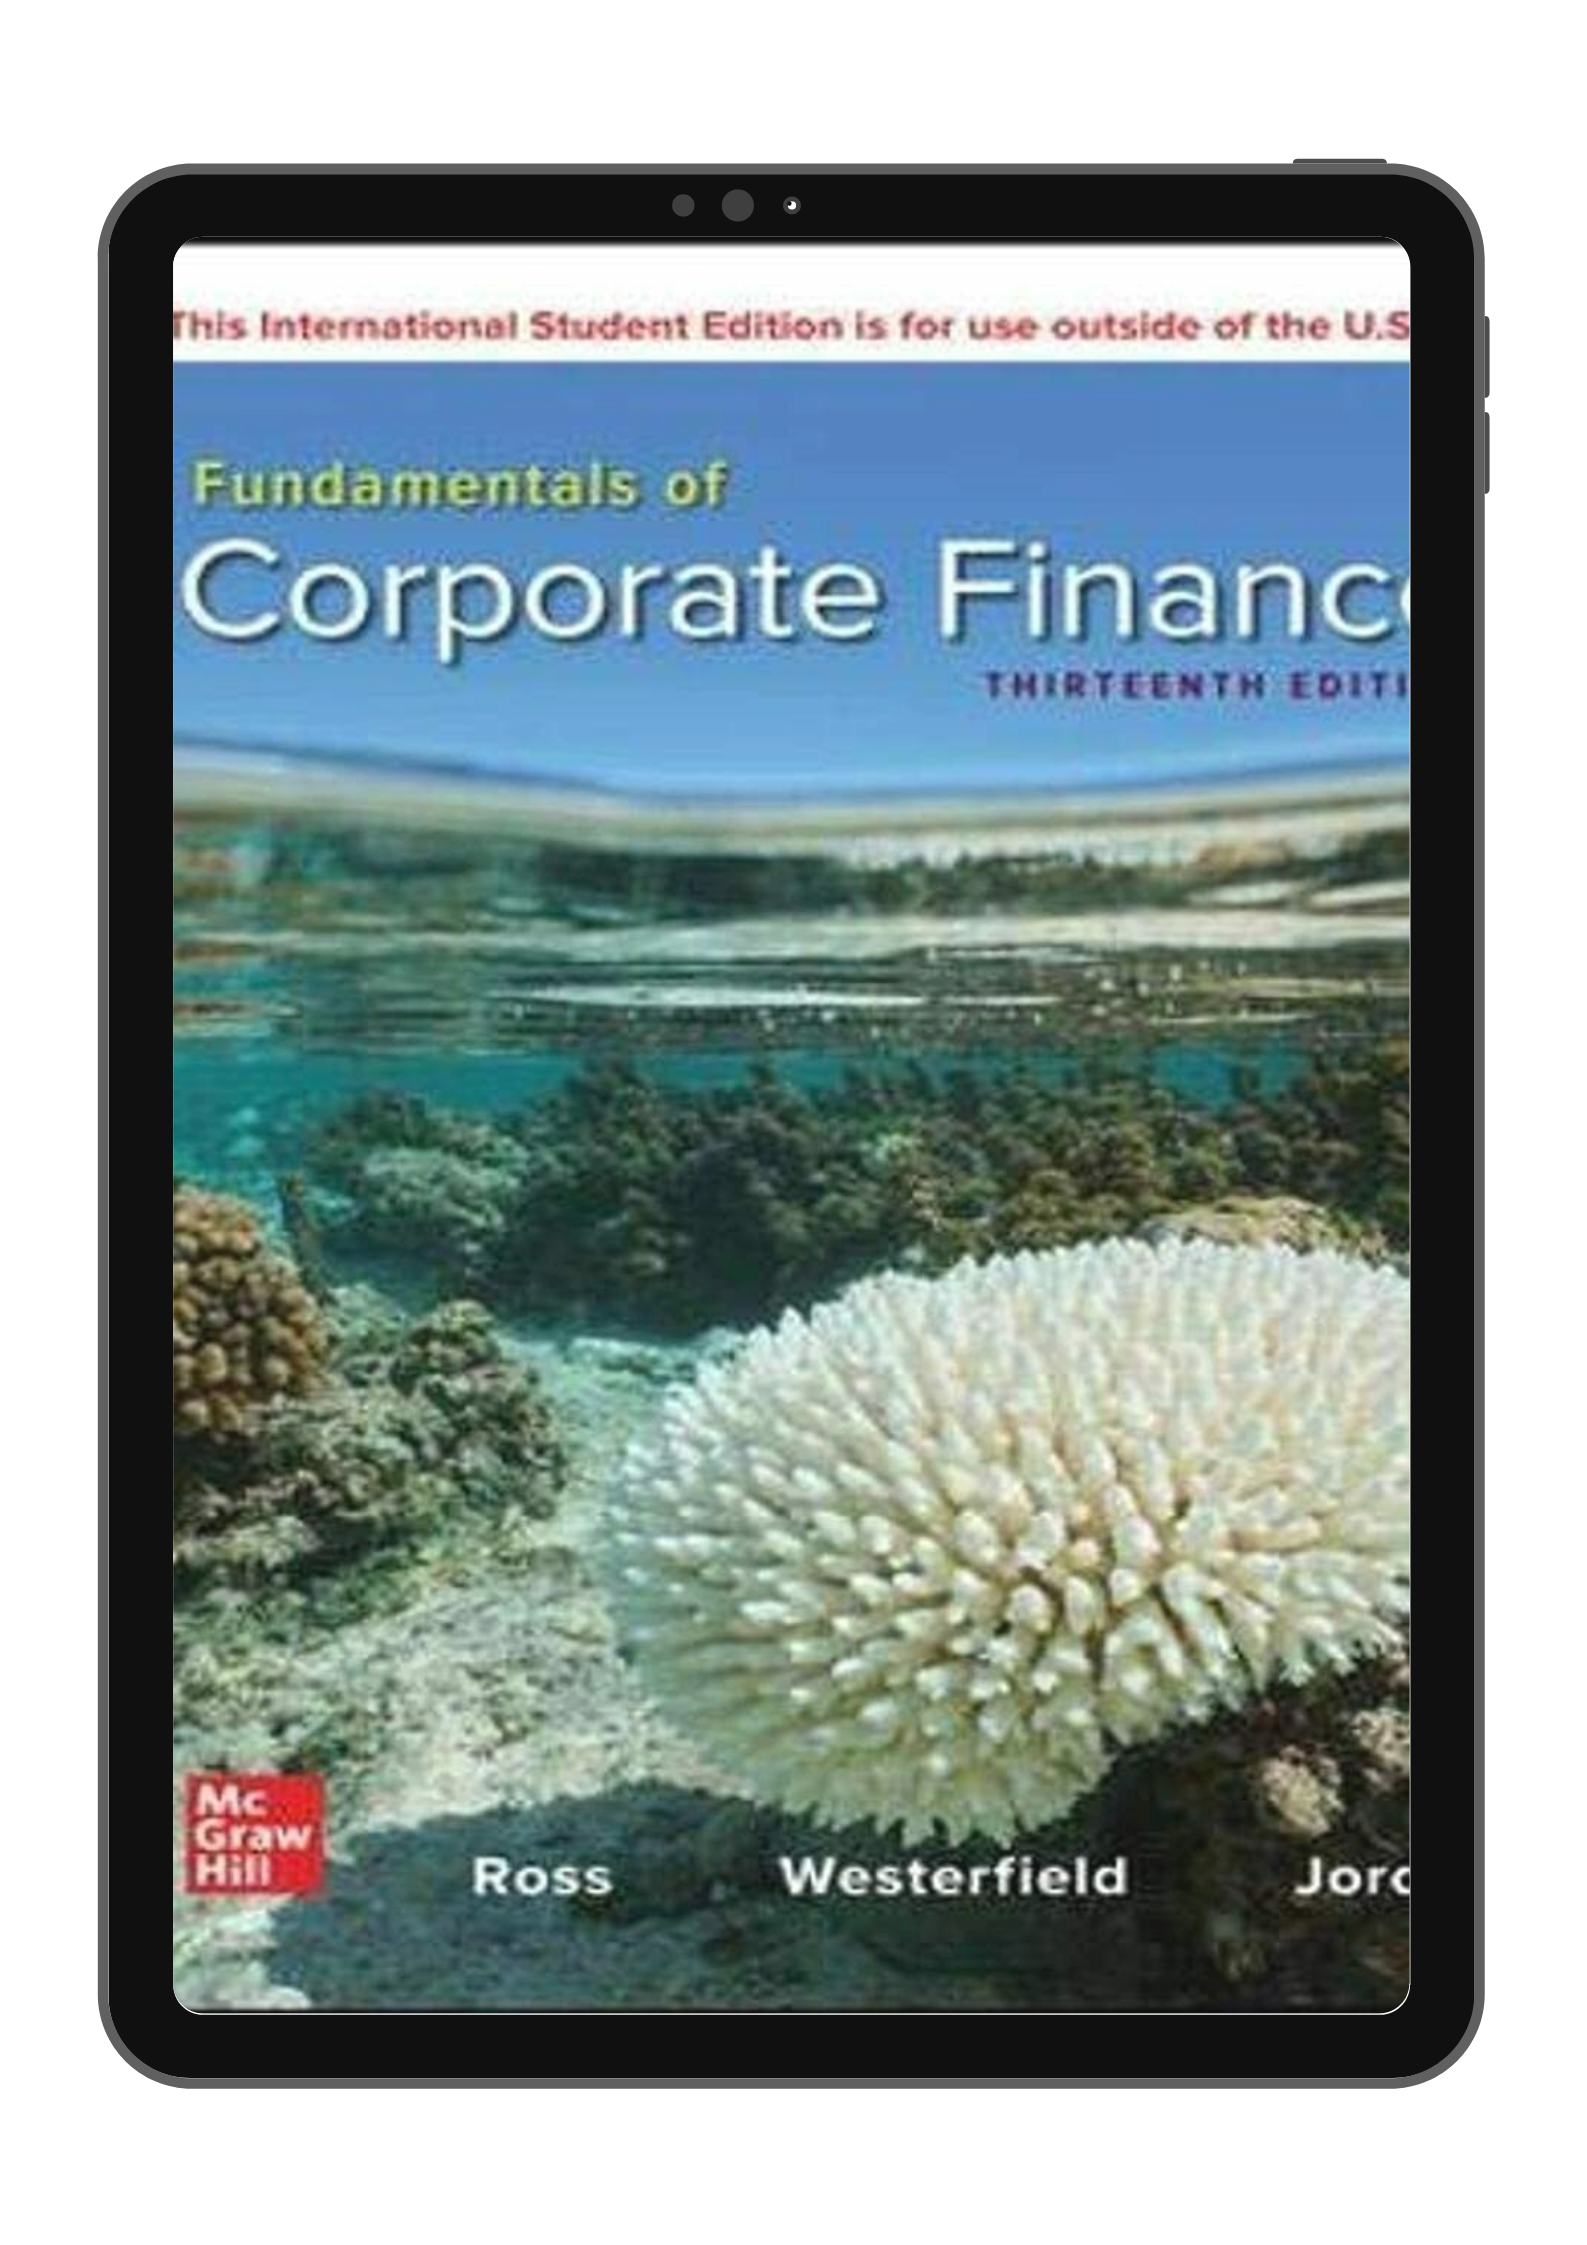 Fundamentals　Stephen　of　Finance　Westerfield　13E　Connect)　–　Corporate　Ross　MY_Uni　Bookstore　Randolph　AC　(EBook+　BOOKSTORE